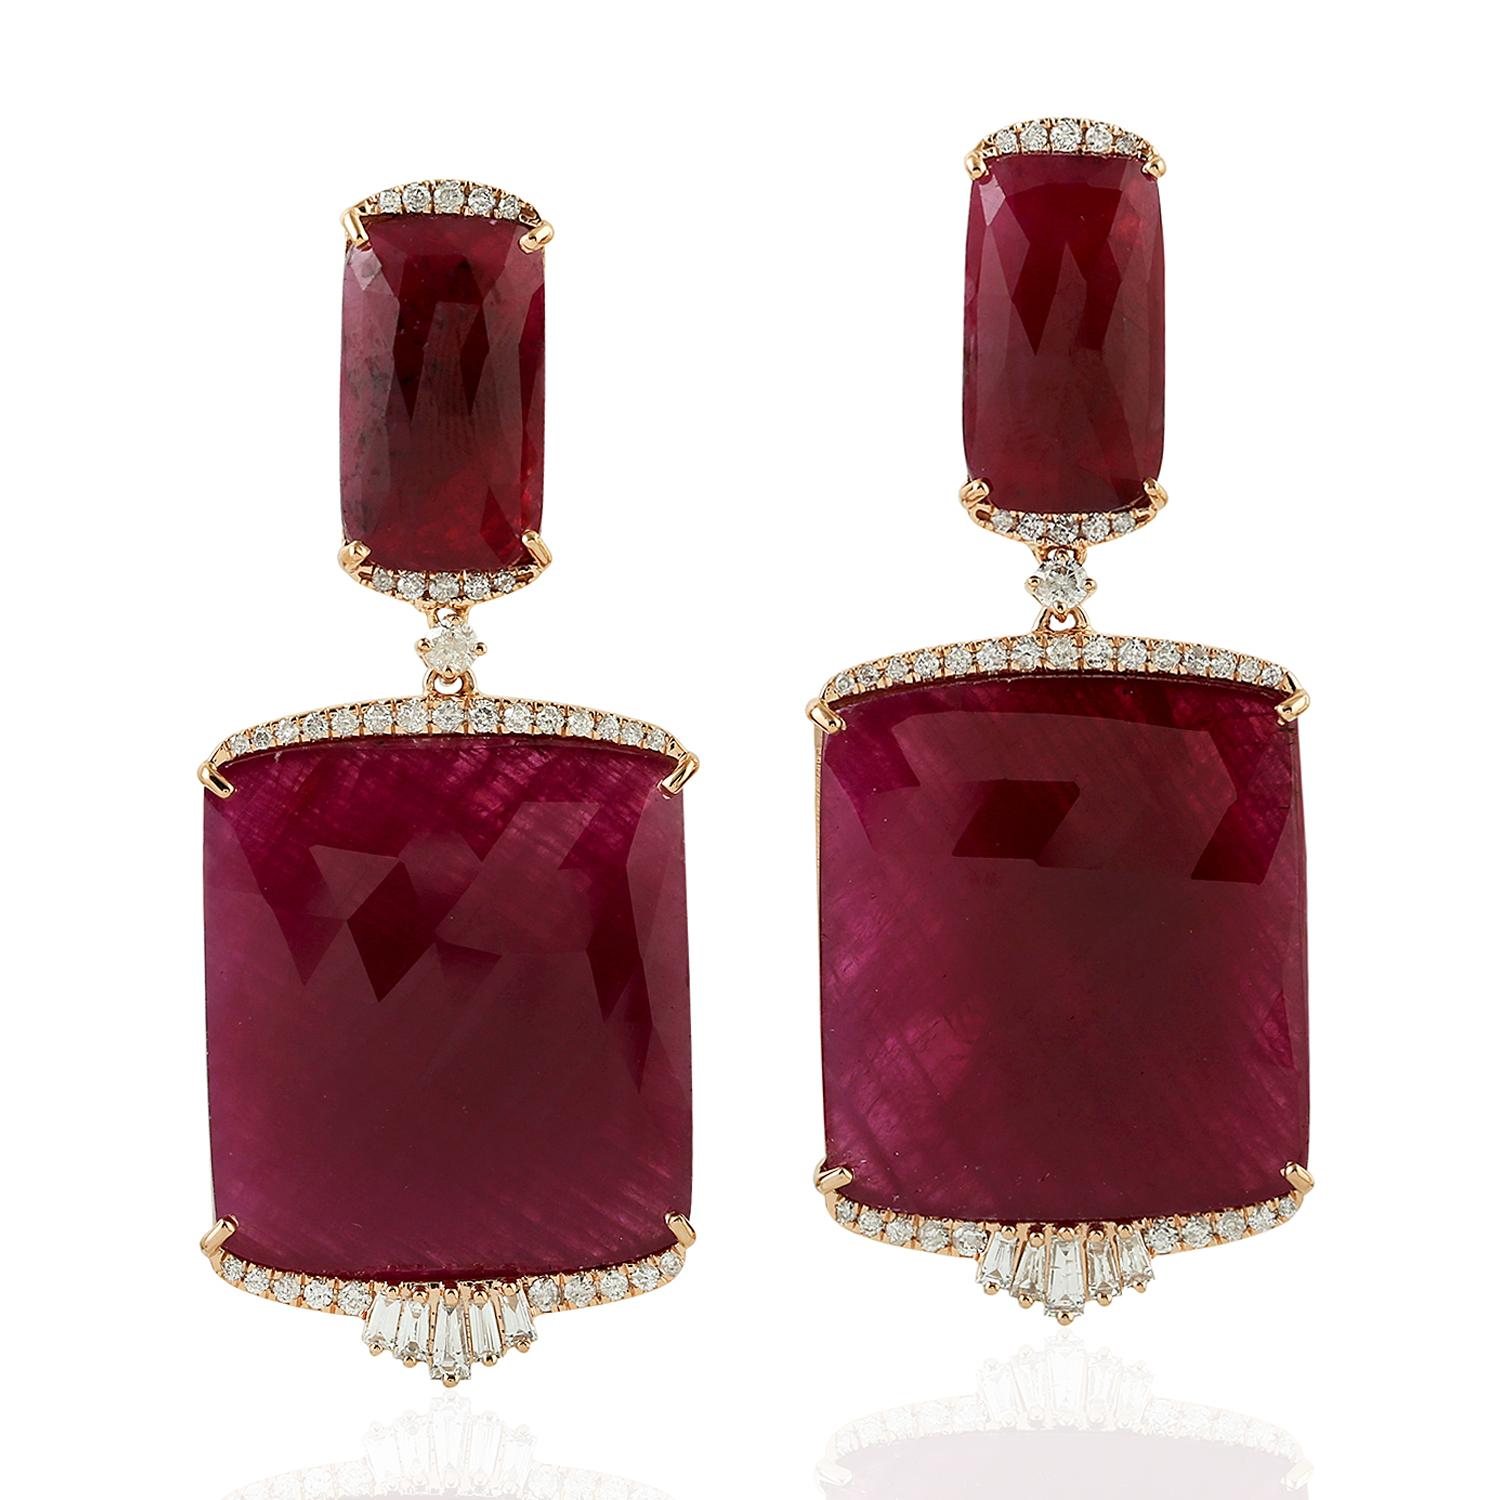 Mixed Cut 85.52 Carat Ruby Diamond 18 Karat Gold Earrings For Sale